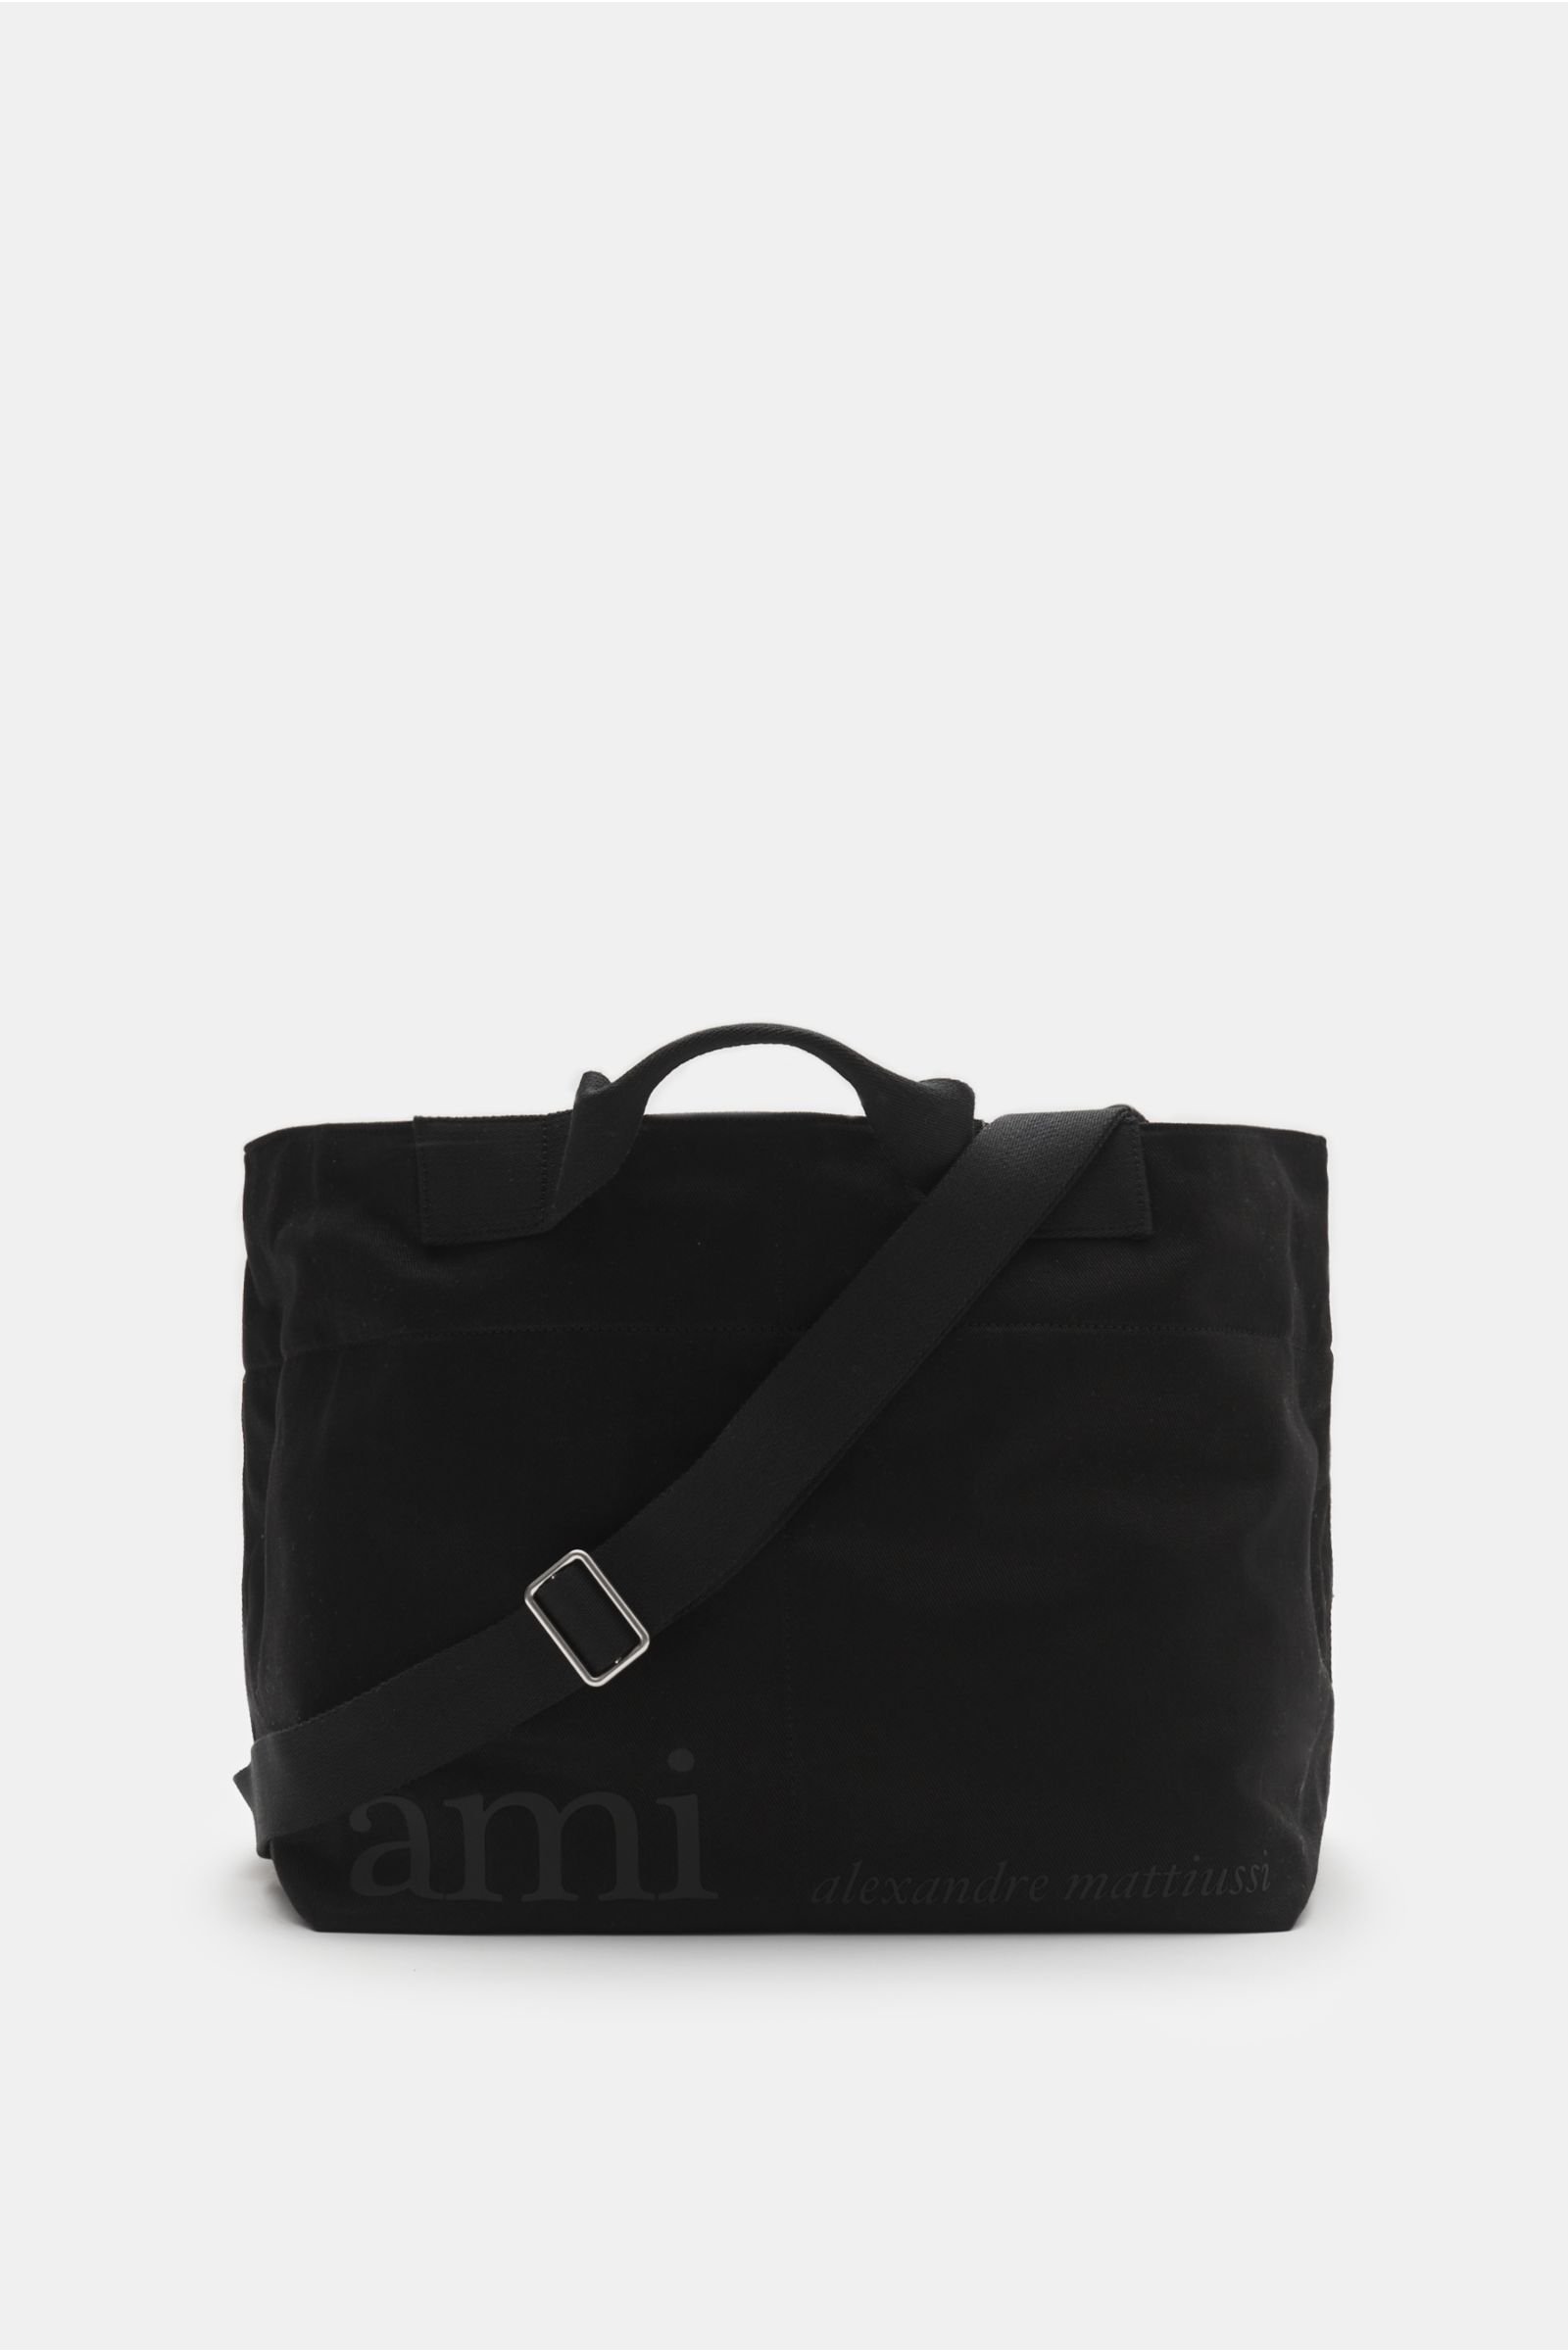 Canvas shopper bag black